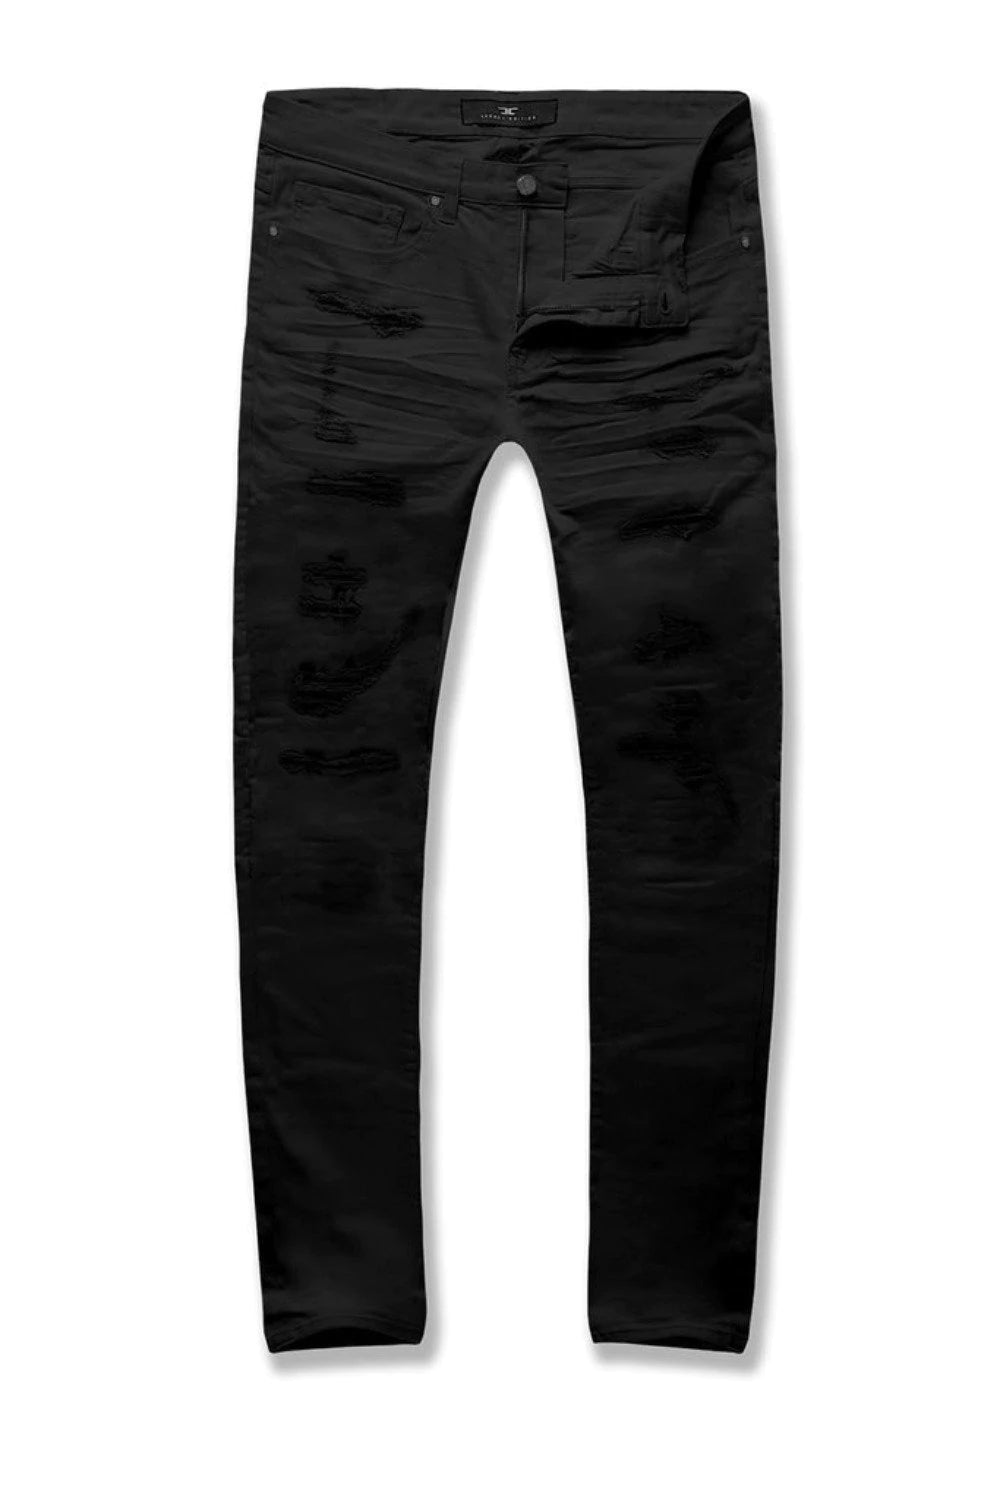 Jordan Craig - Collins Denim Jeans - Black (JC960R)